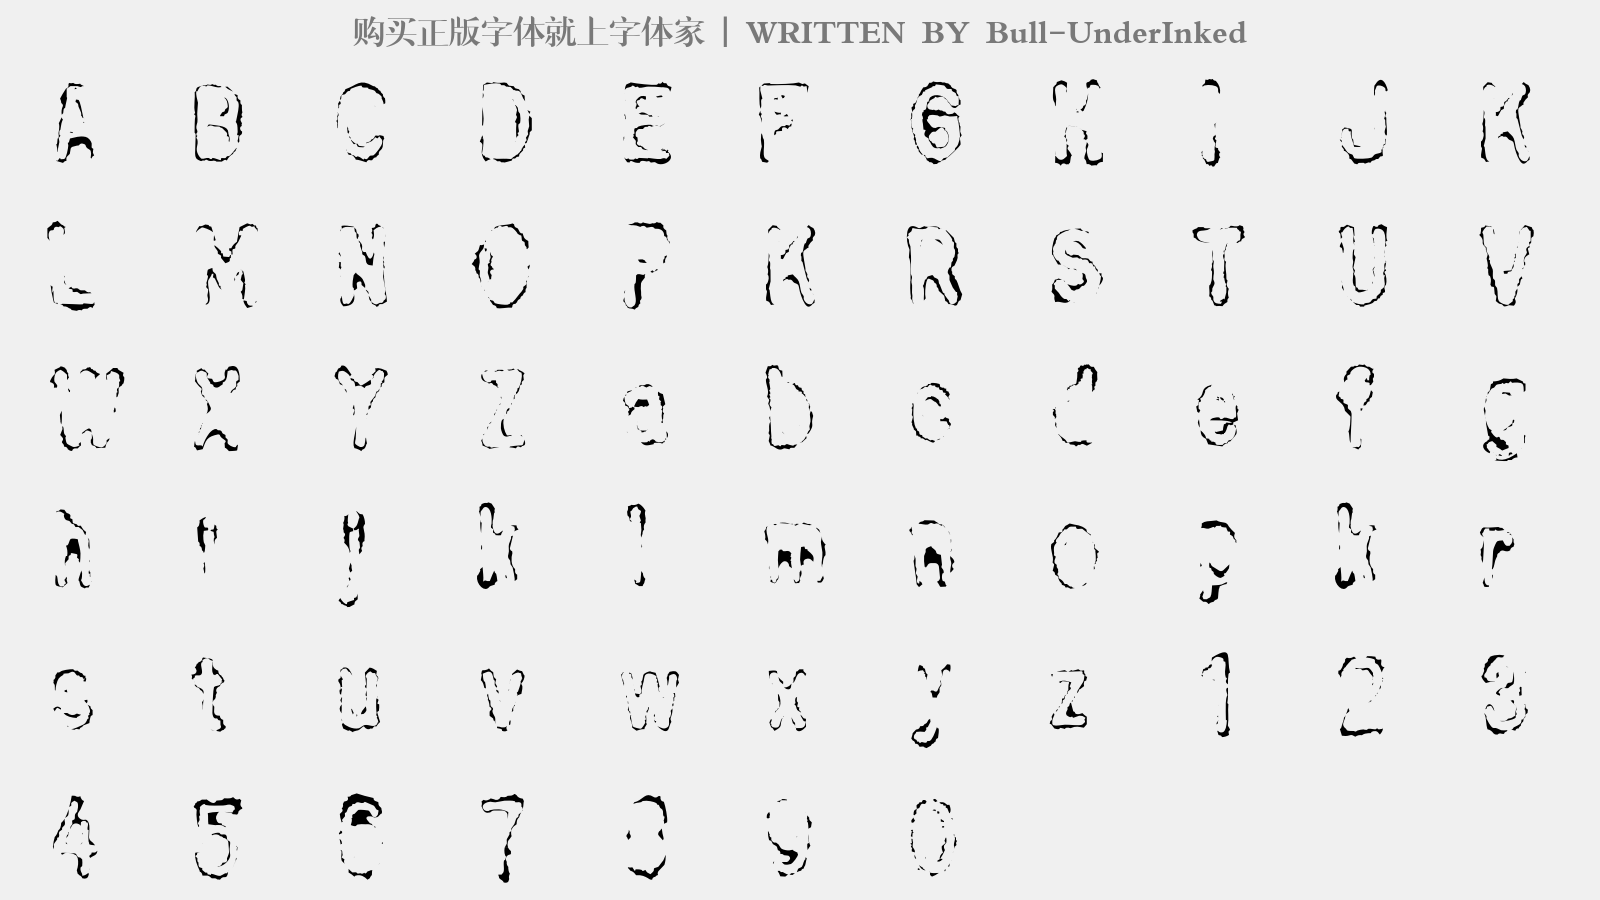 Bull-UnderInked - 大写字母/小写字母/数字